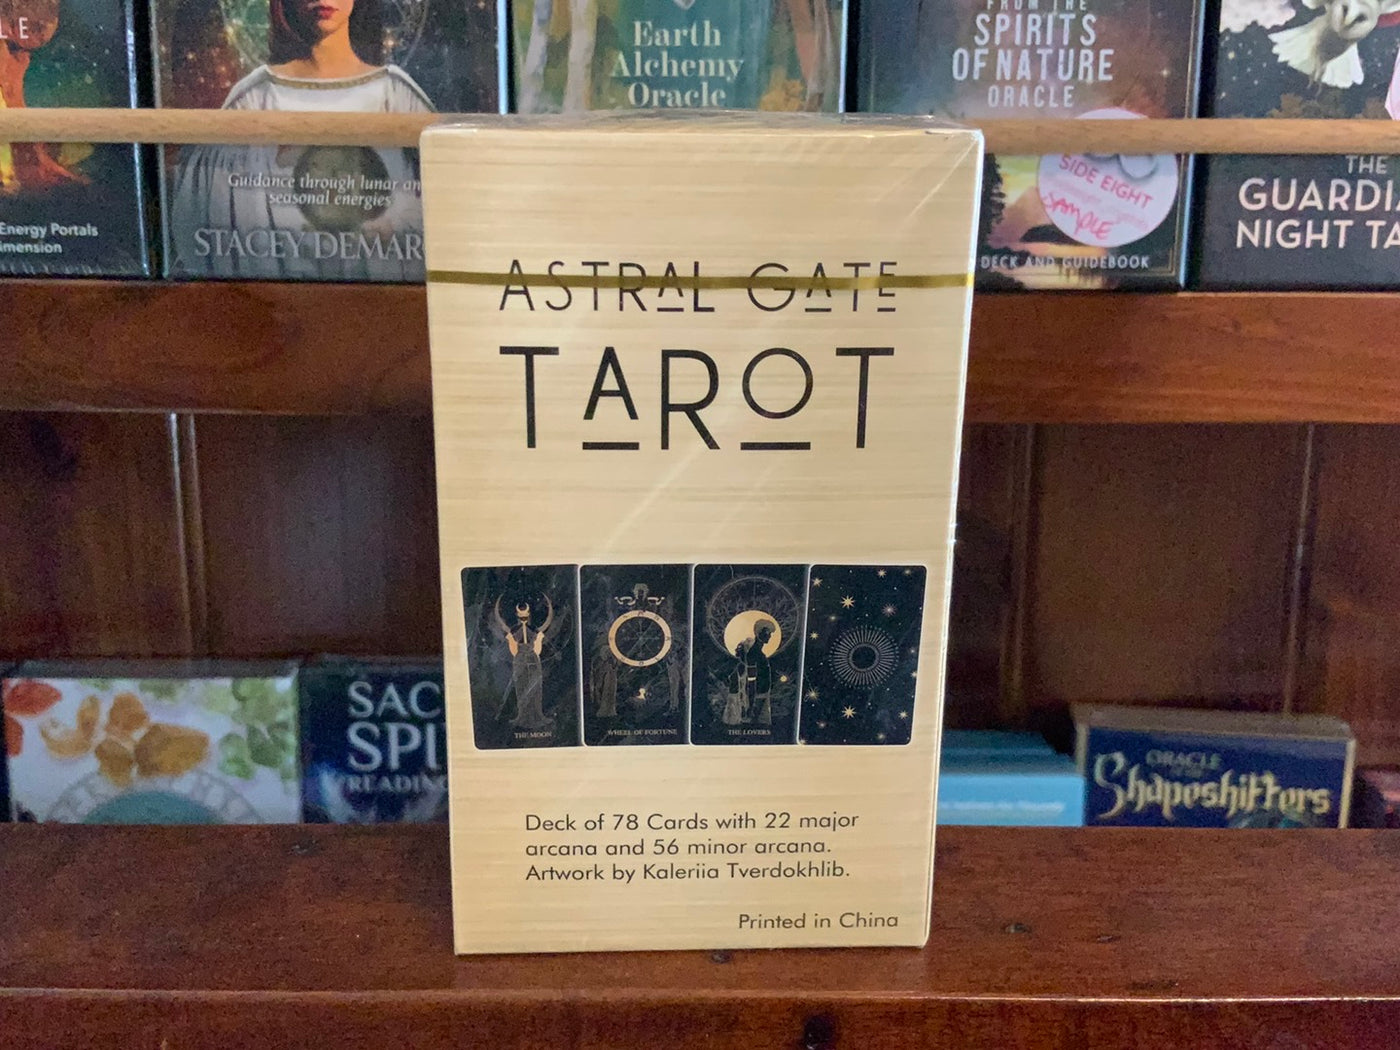 Astral Gate Tarot